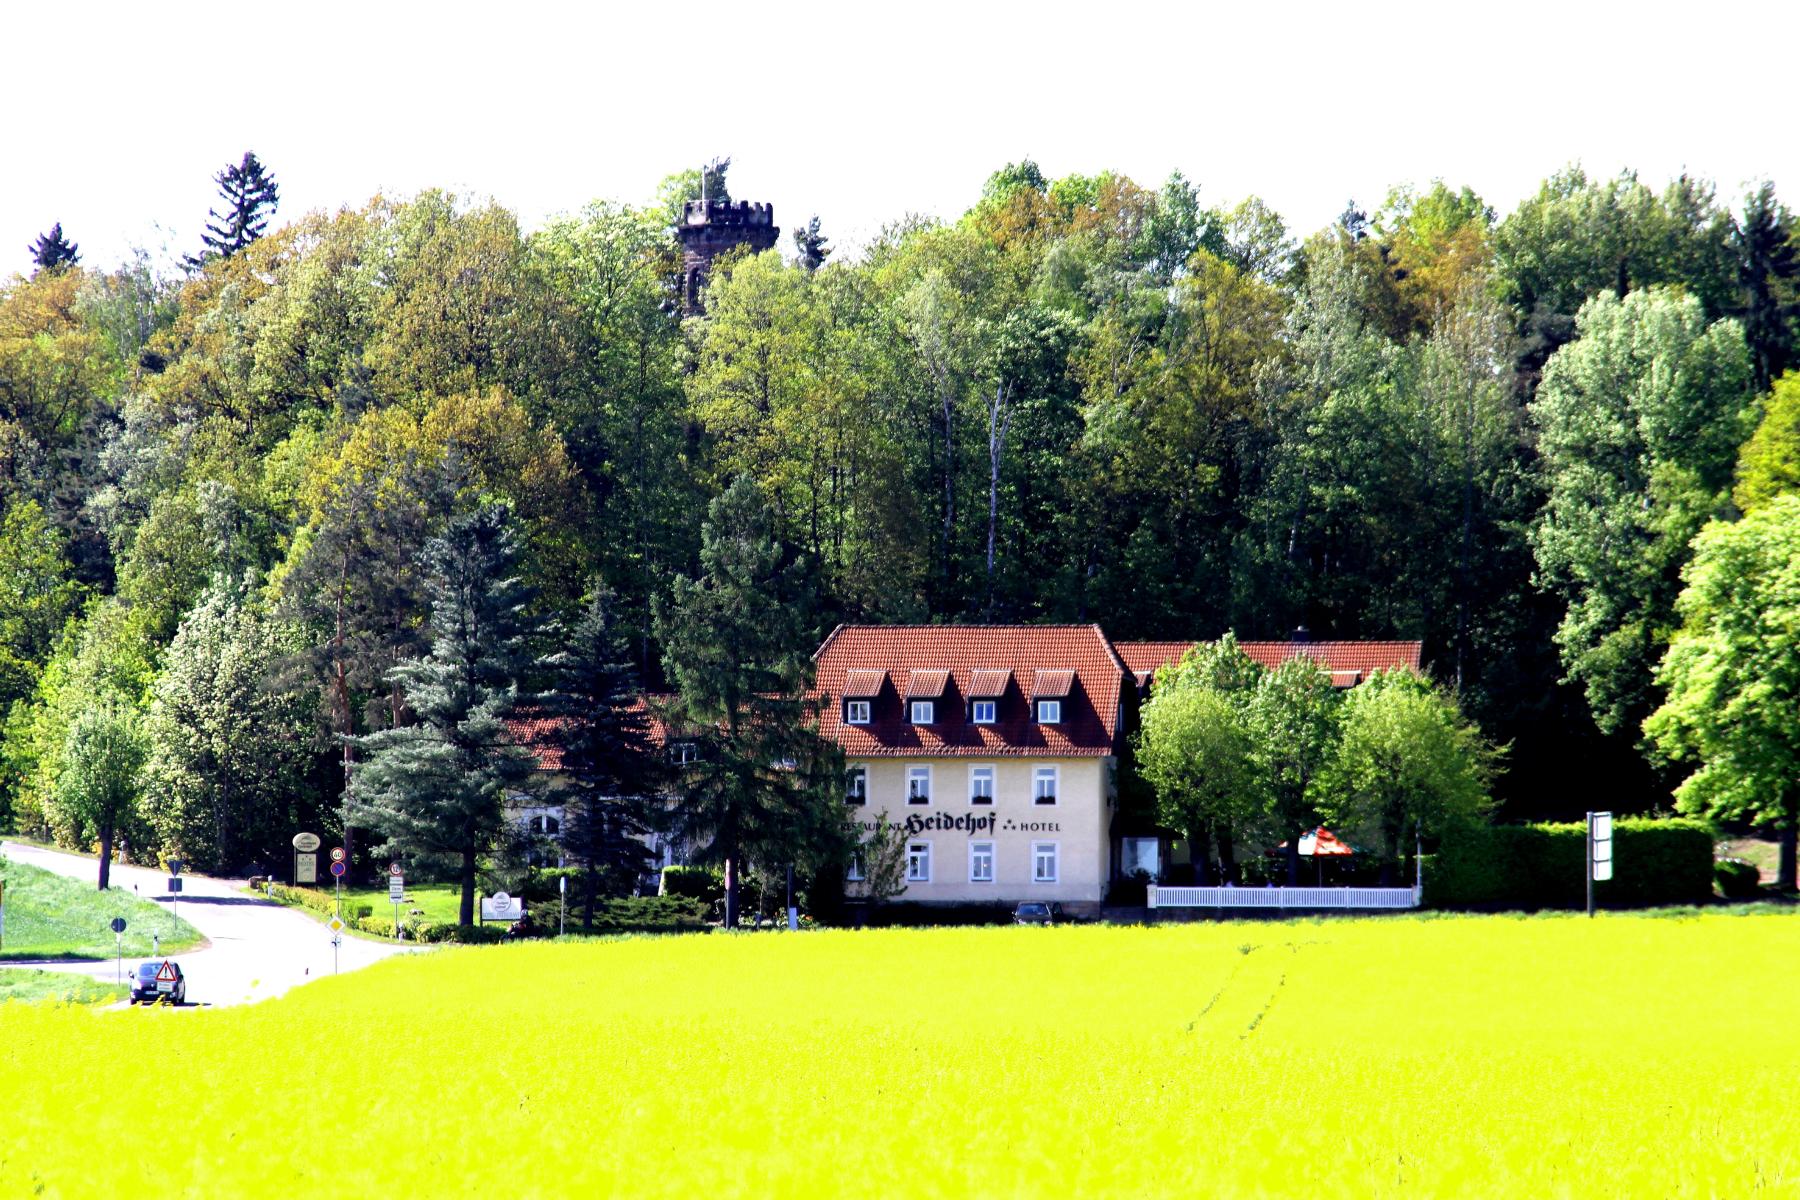 Landhaus Heidehof, Hohe Str. 2 in Dippoldiswalde